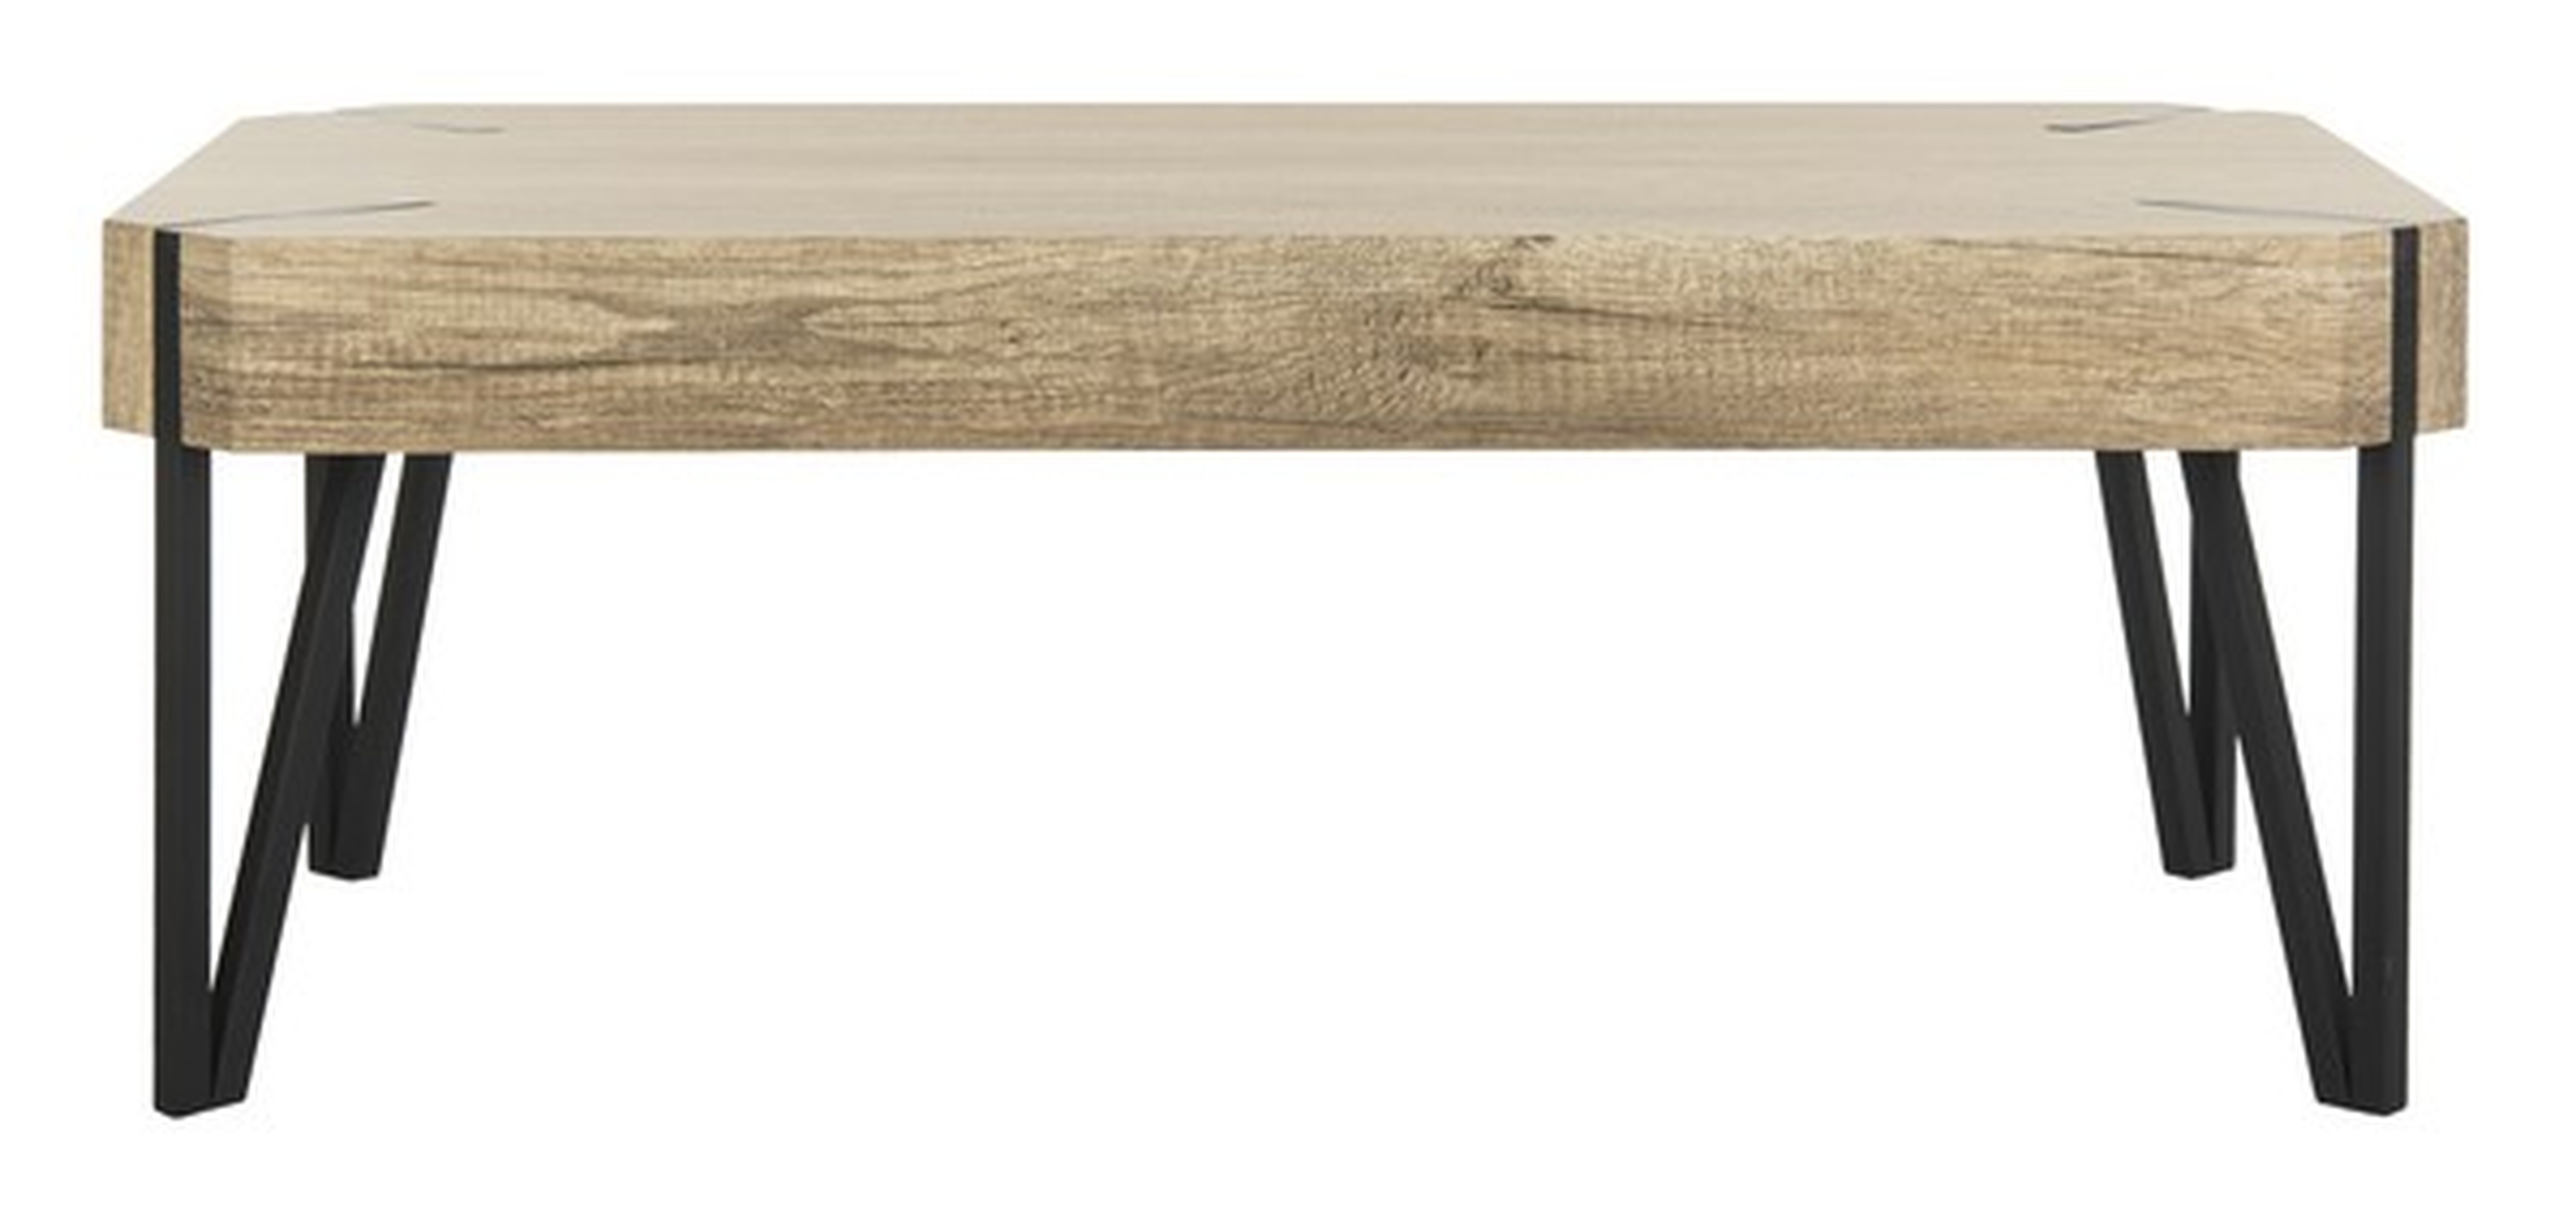 Liann Rustic Midcentury Wood Top Coffee Table - Multi Brown - Arlo Home - Arlo Home